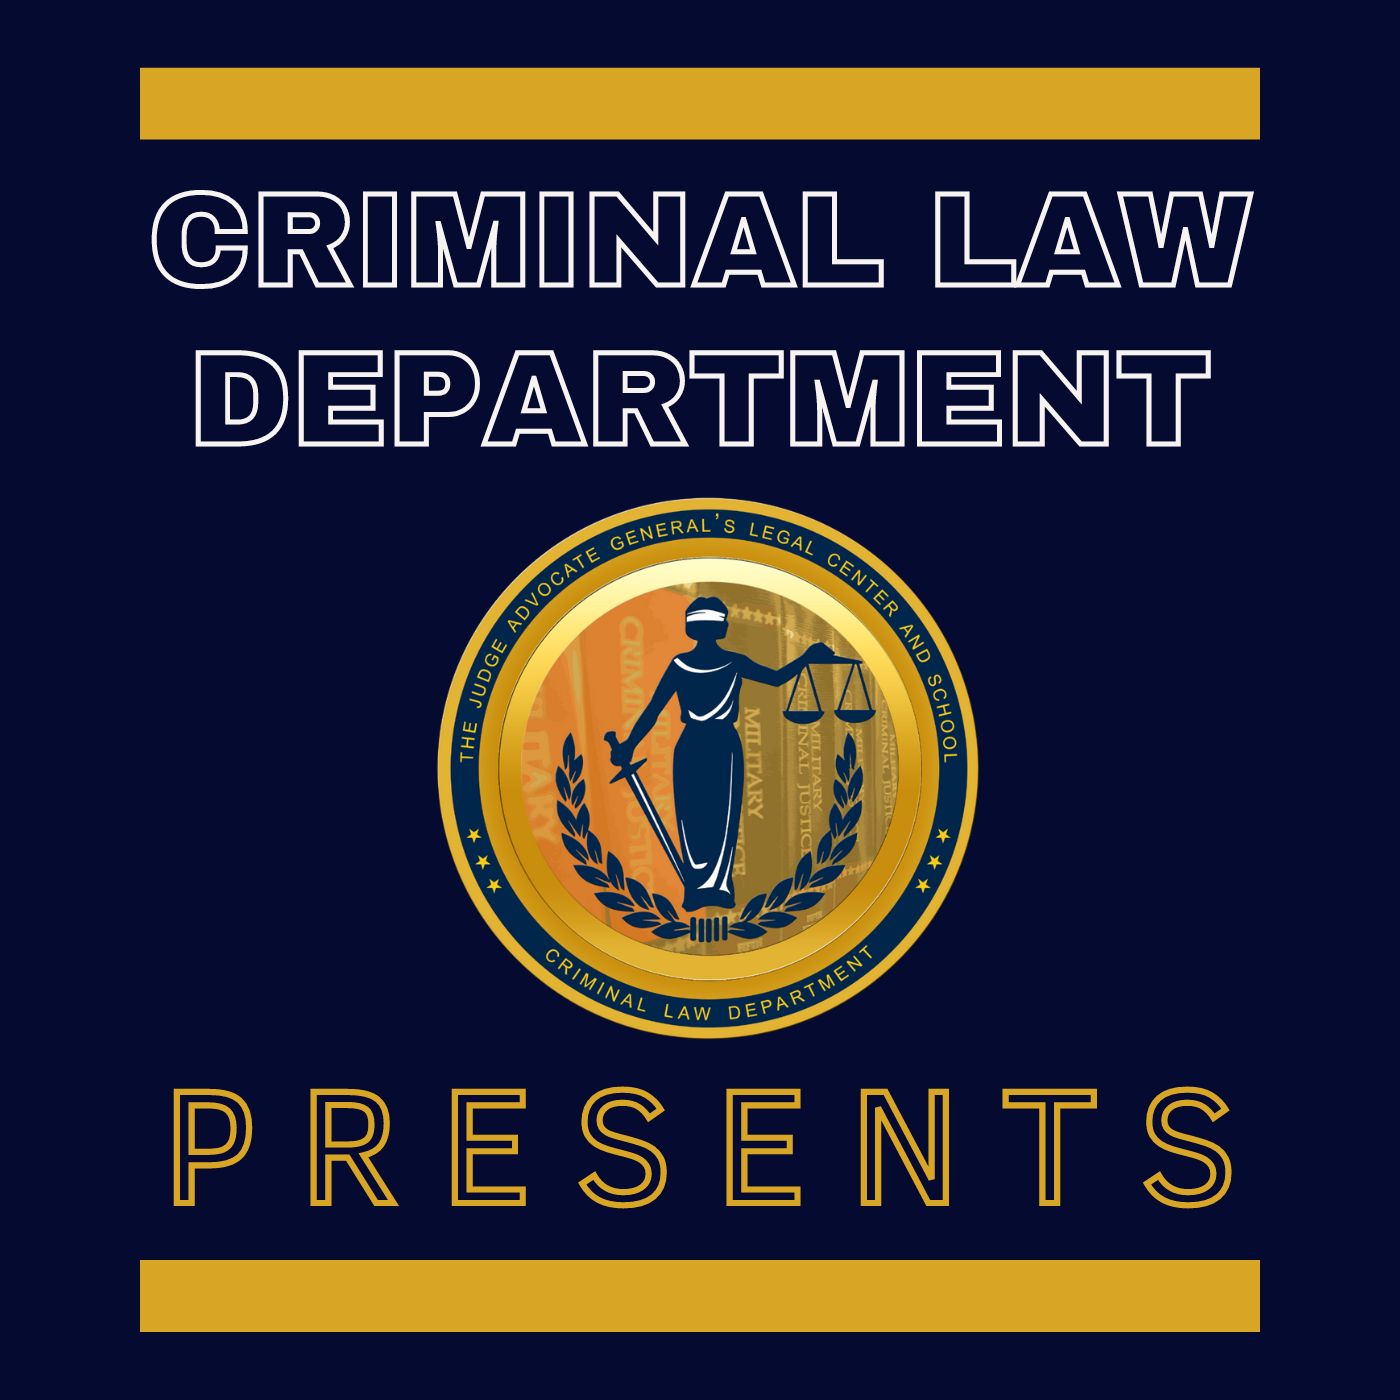 Criminal Law Department Presents logo